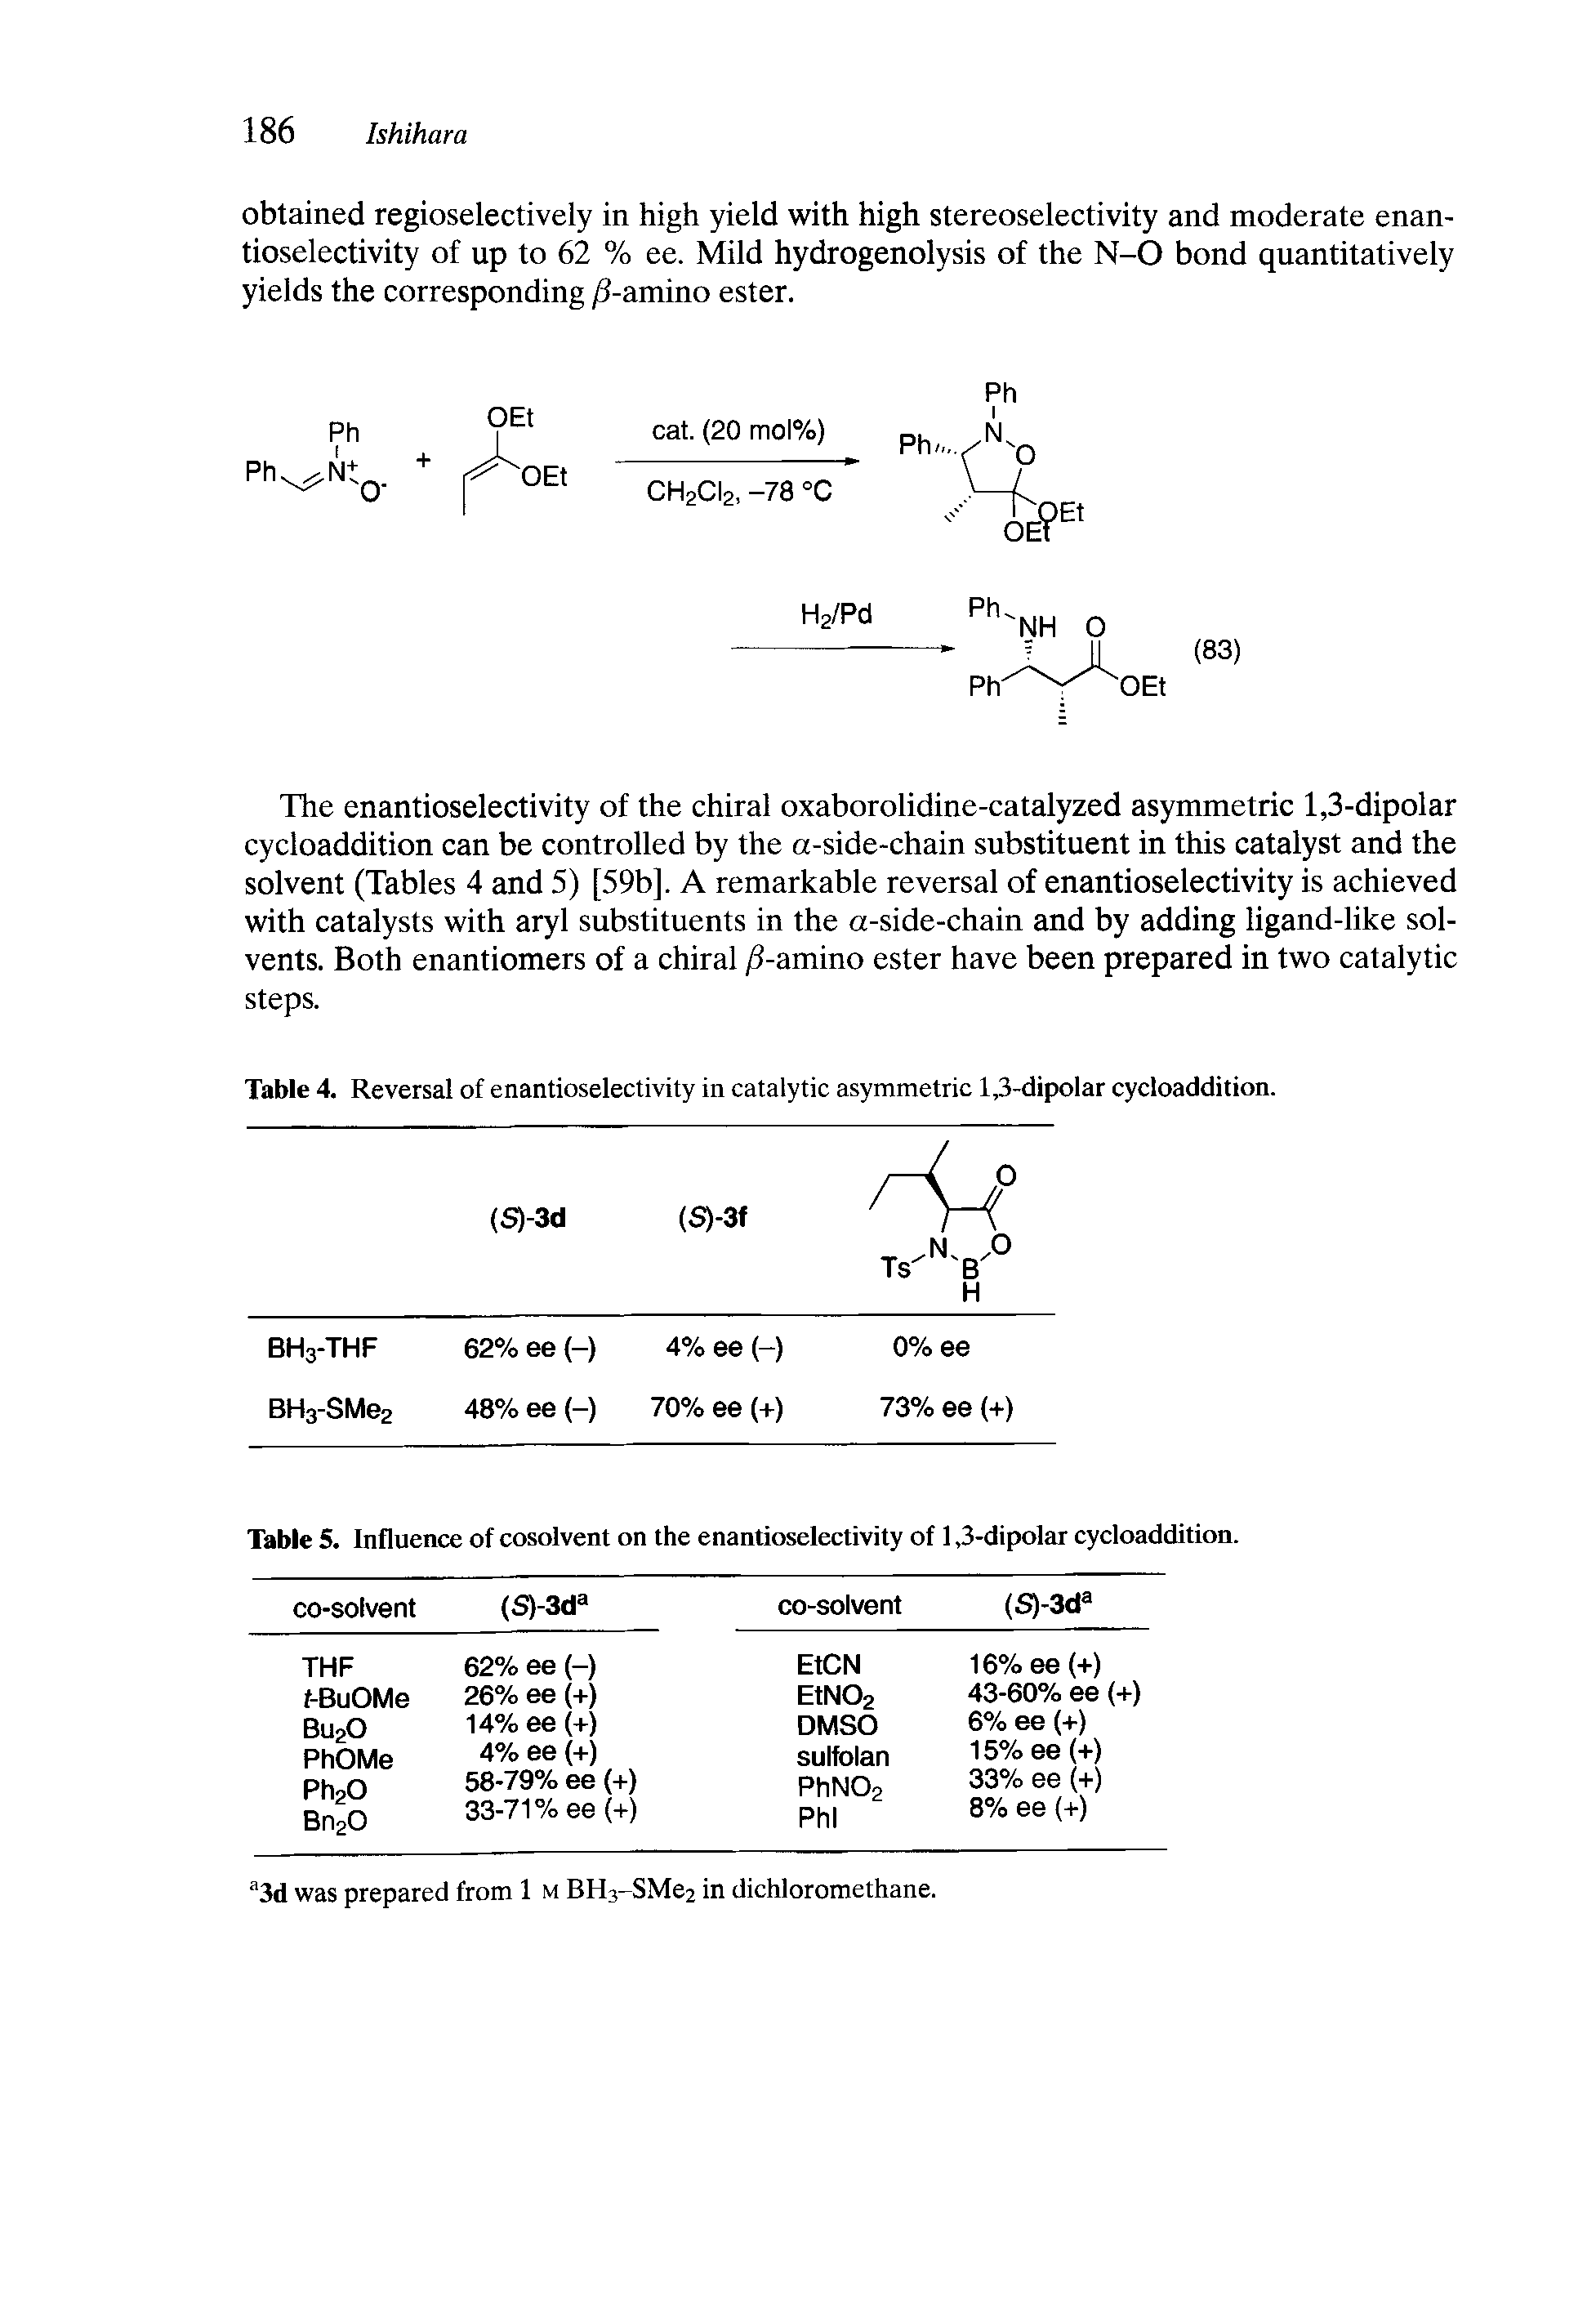 Table 4. Reversal of enantioselectivity in catalytic asymmetric 1,3-dipolar cycloaddition.